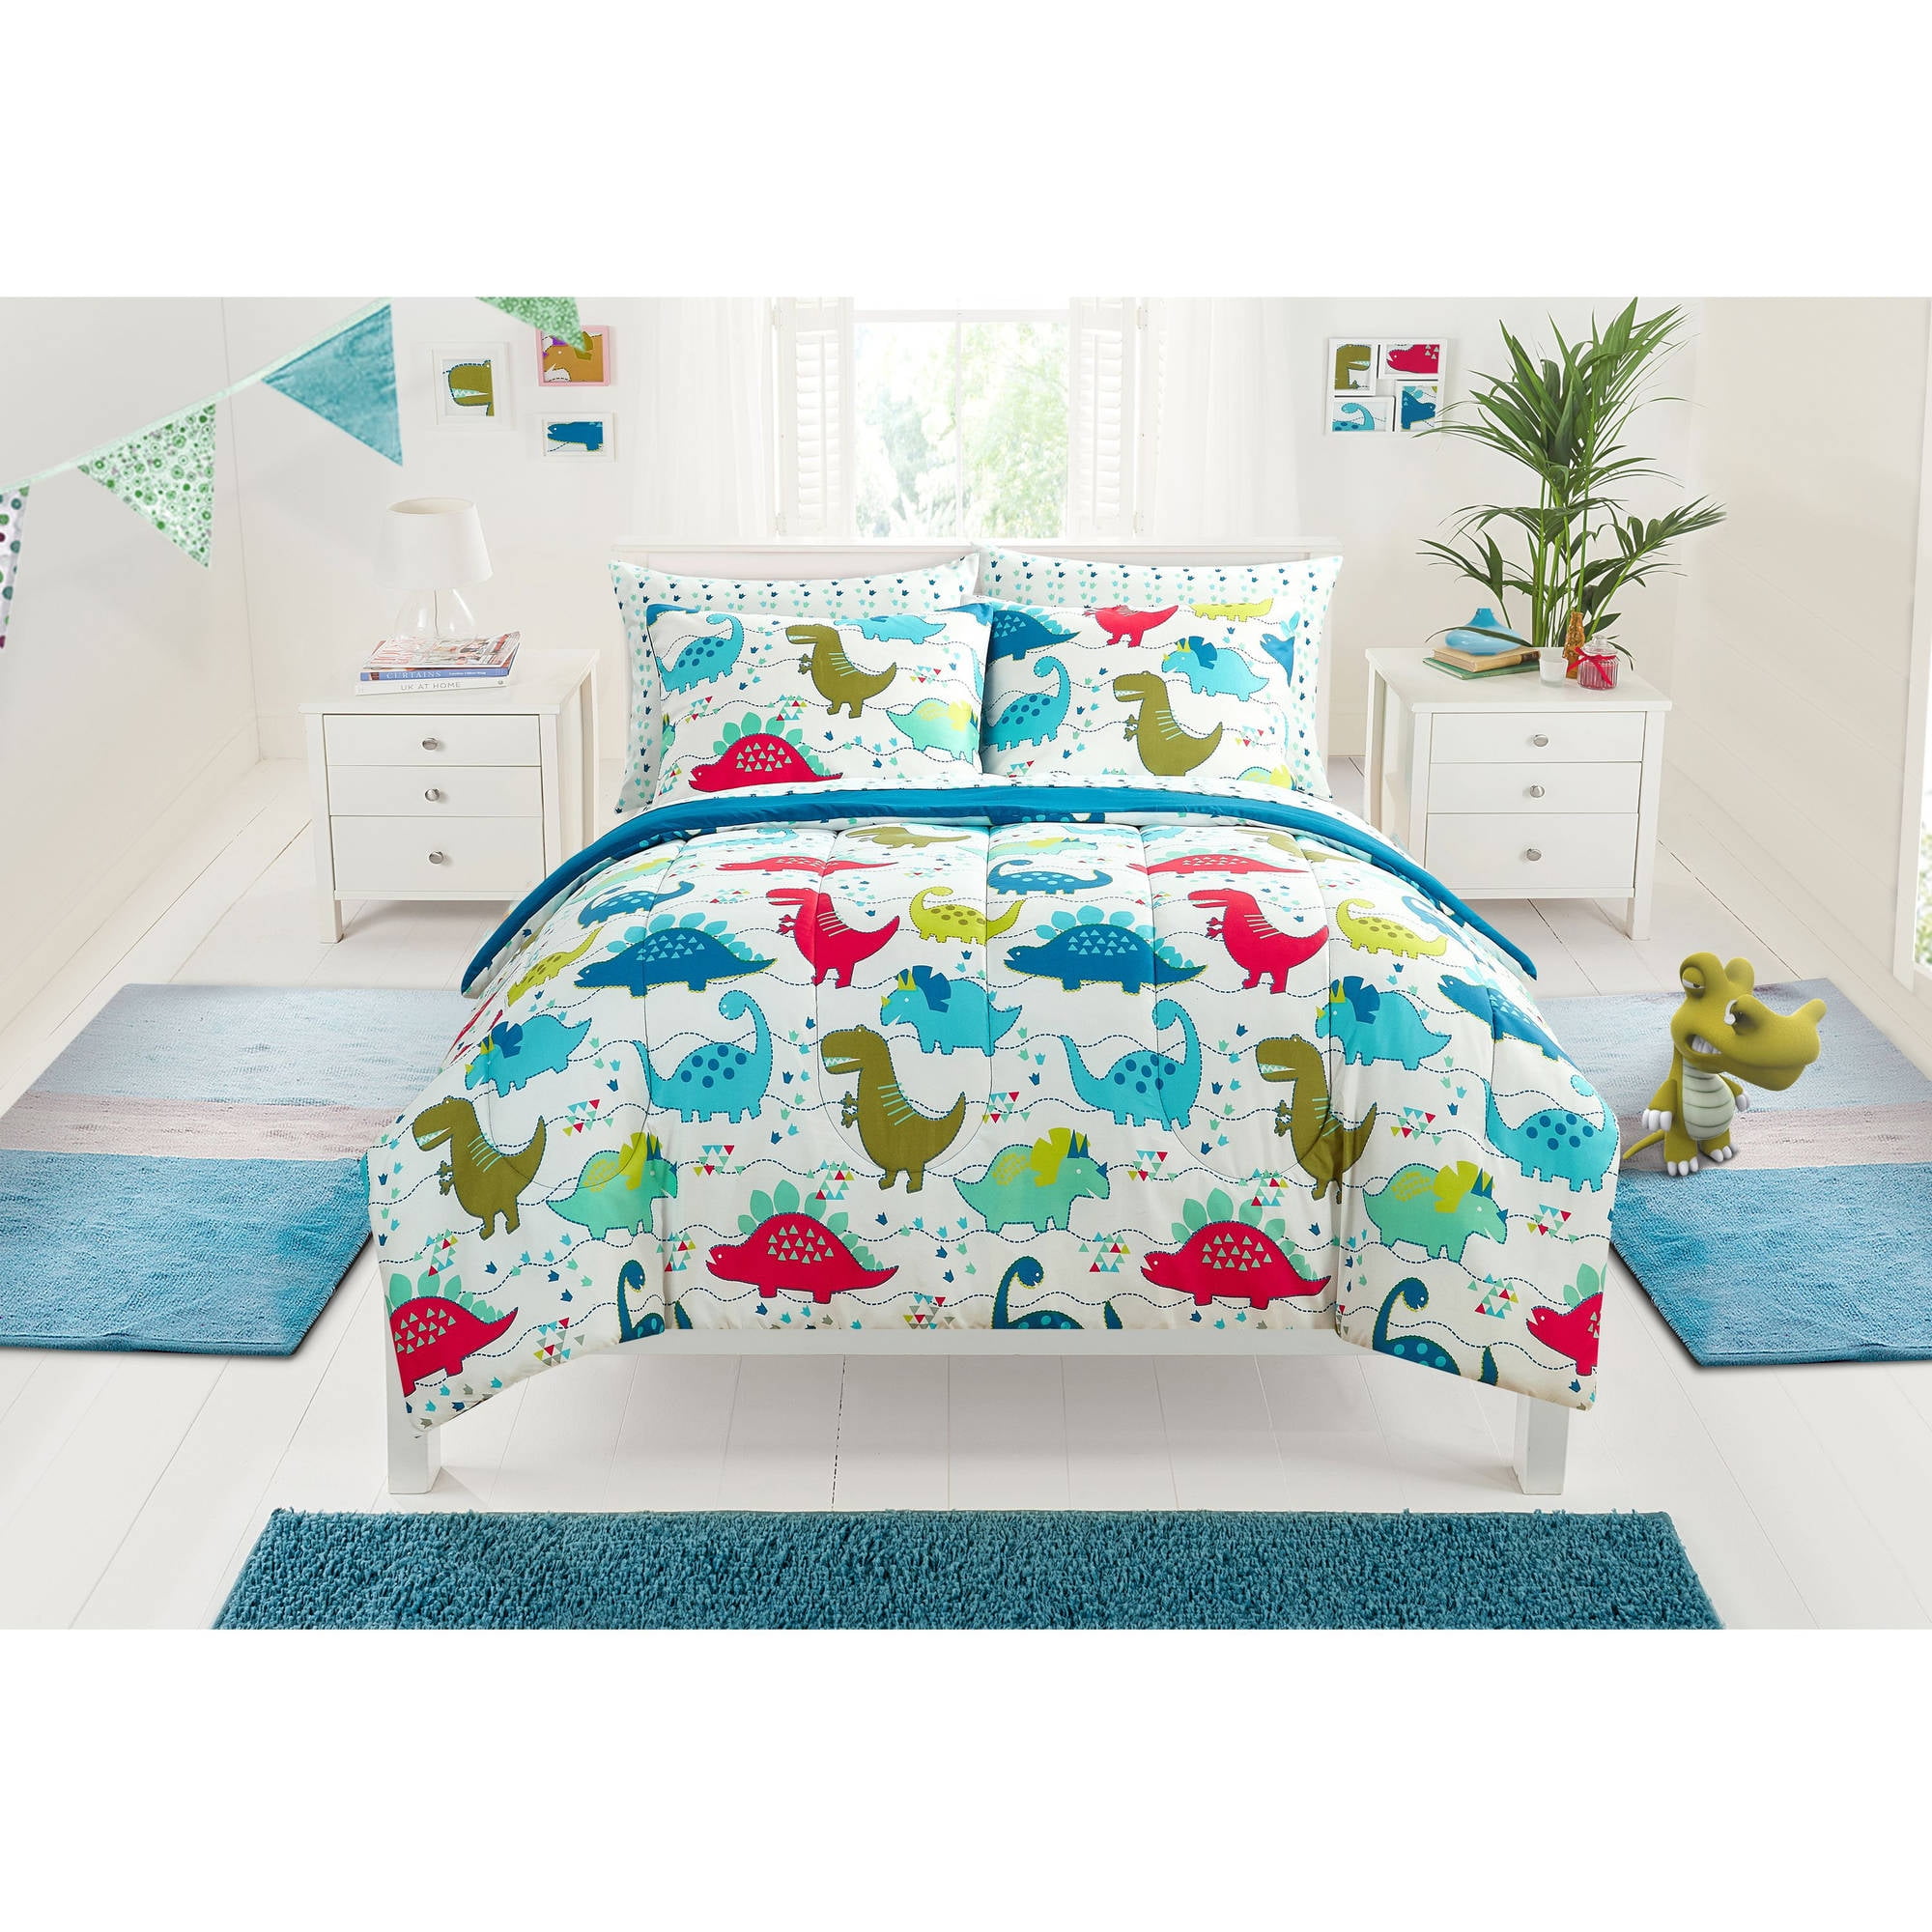 057 Dinosaur Twin Kids Bedspread Quilts Set for Teens Boys Girls Bedding Set